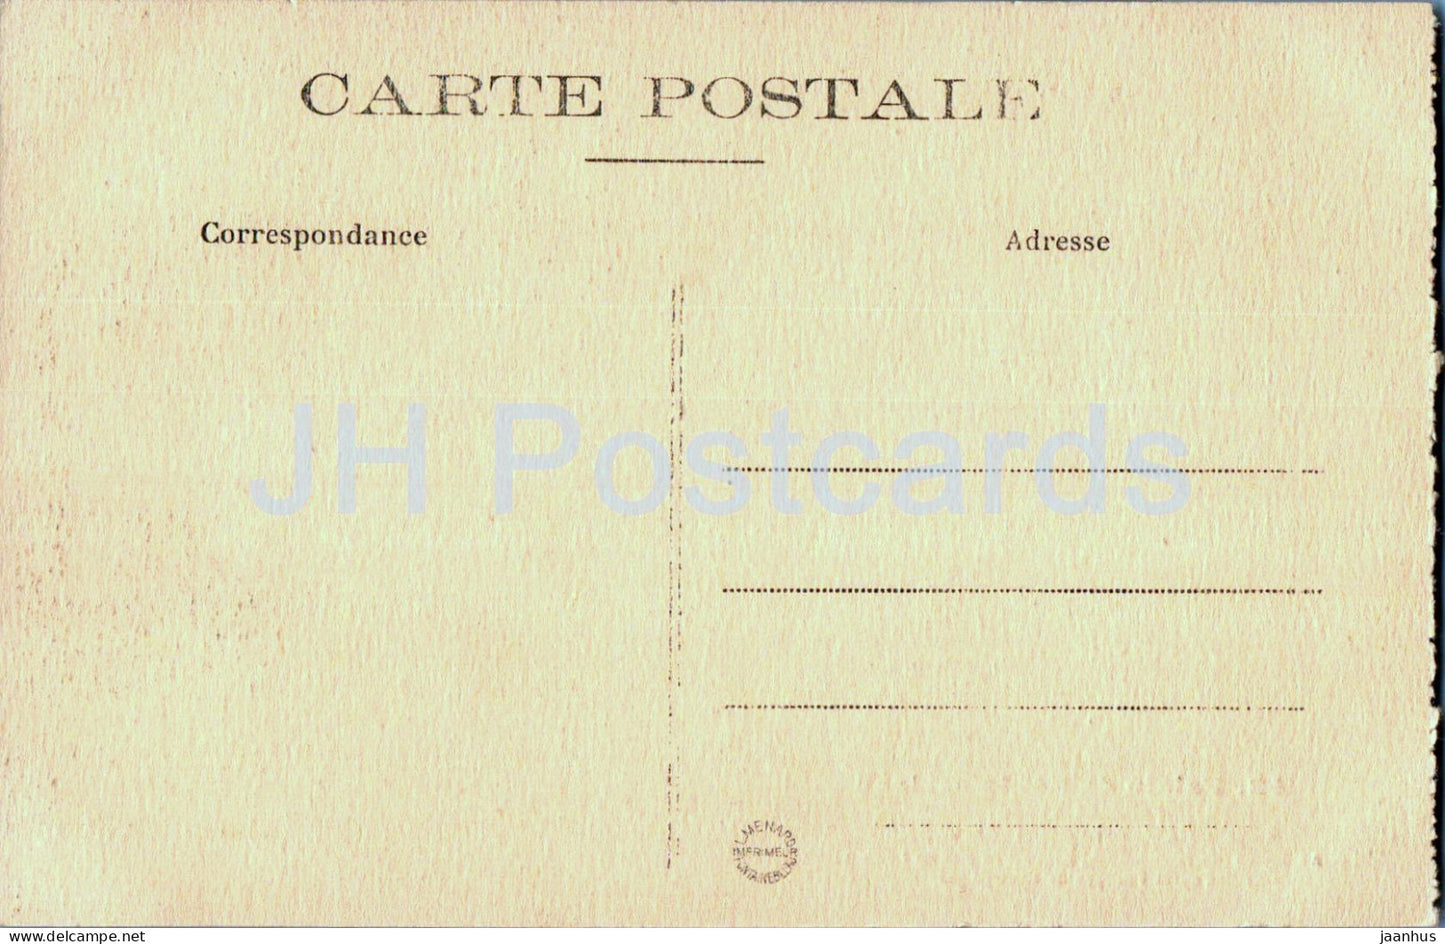 Palais de Fontainebleau - Salle du Trone - 42 - alte Postkarte - Frankreich - unbenutzt 